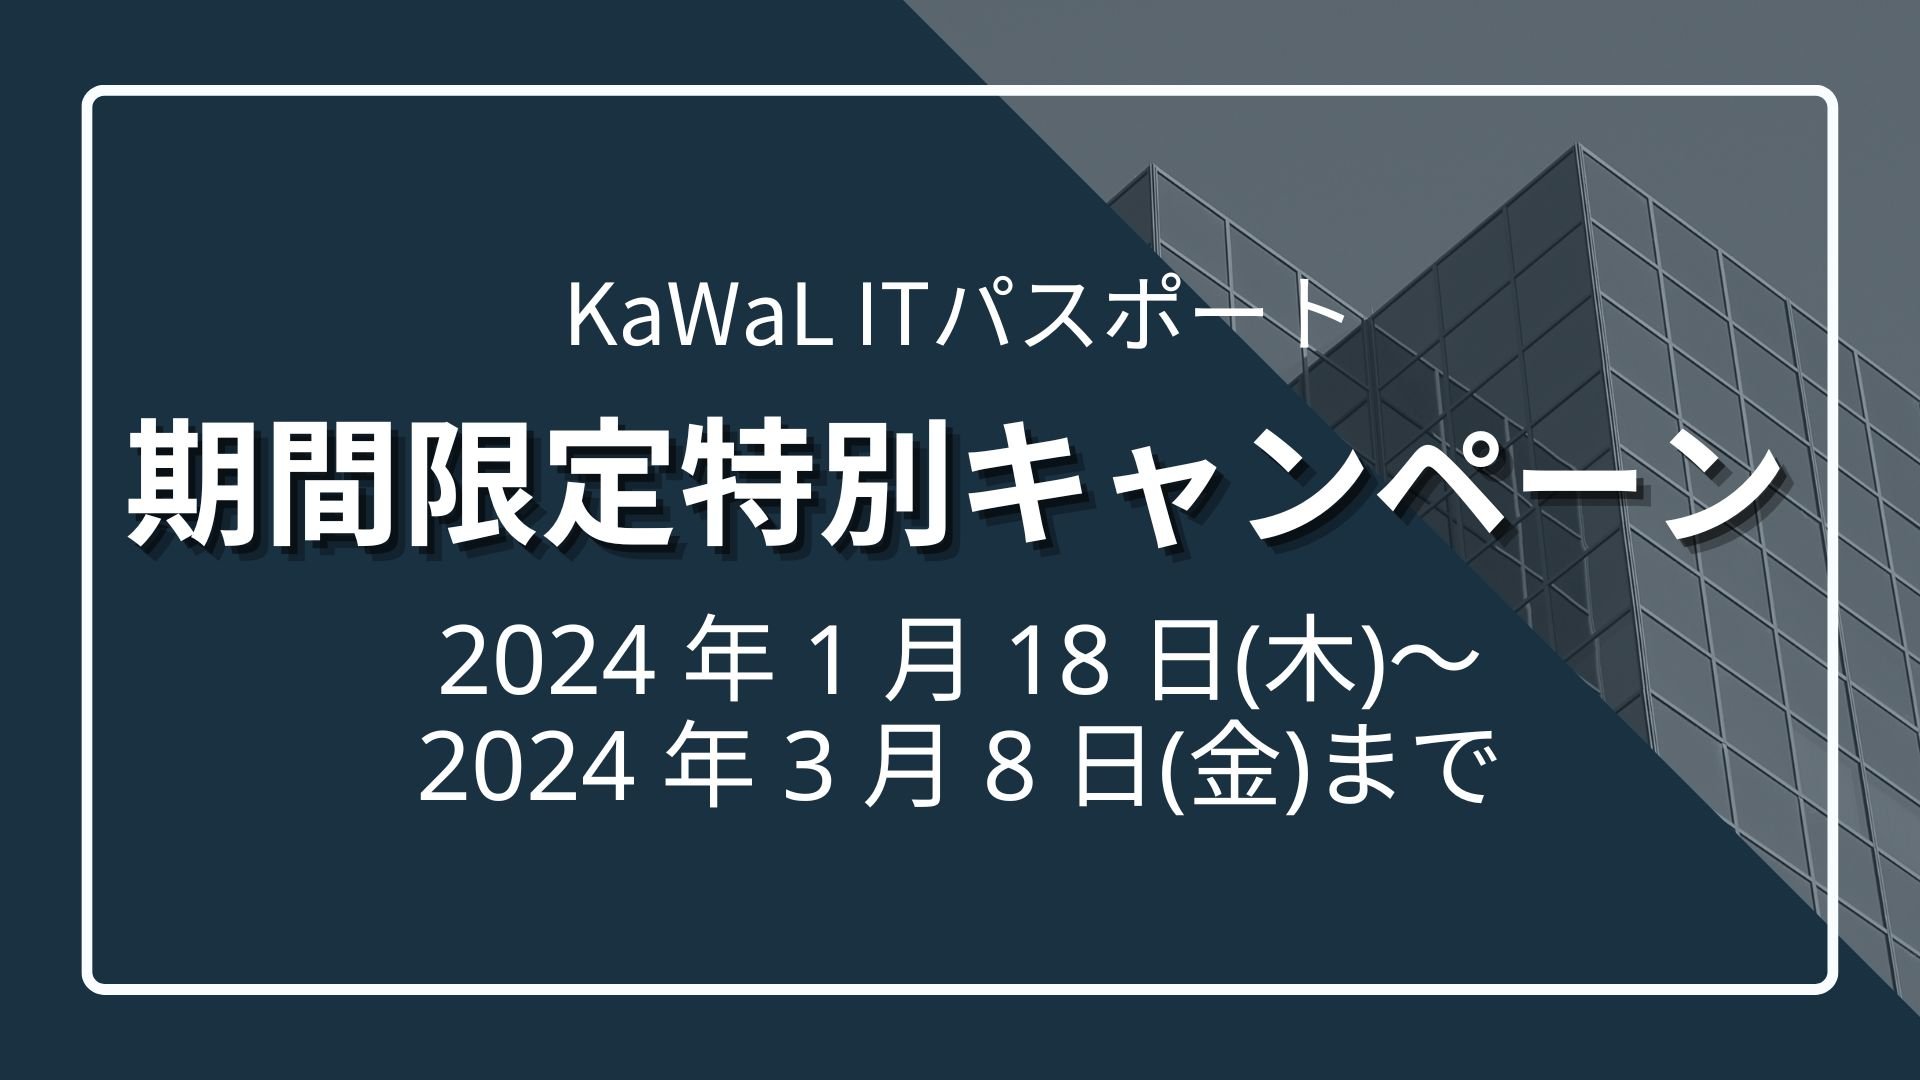 KaWaL ITパスポート【期間限定】特別キャンペーンのサムネイル